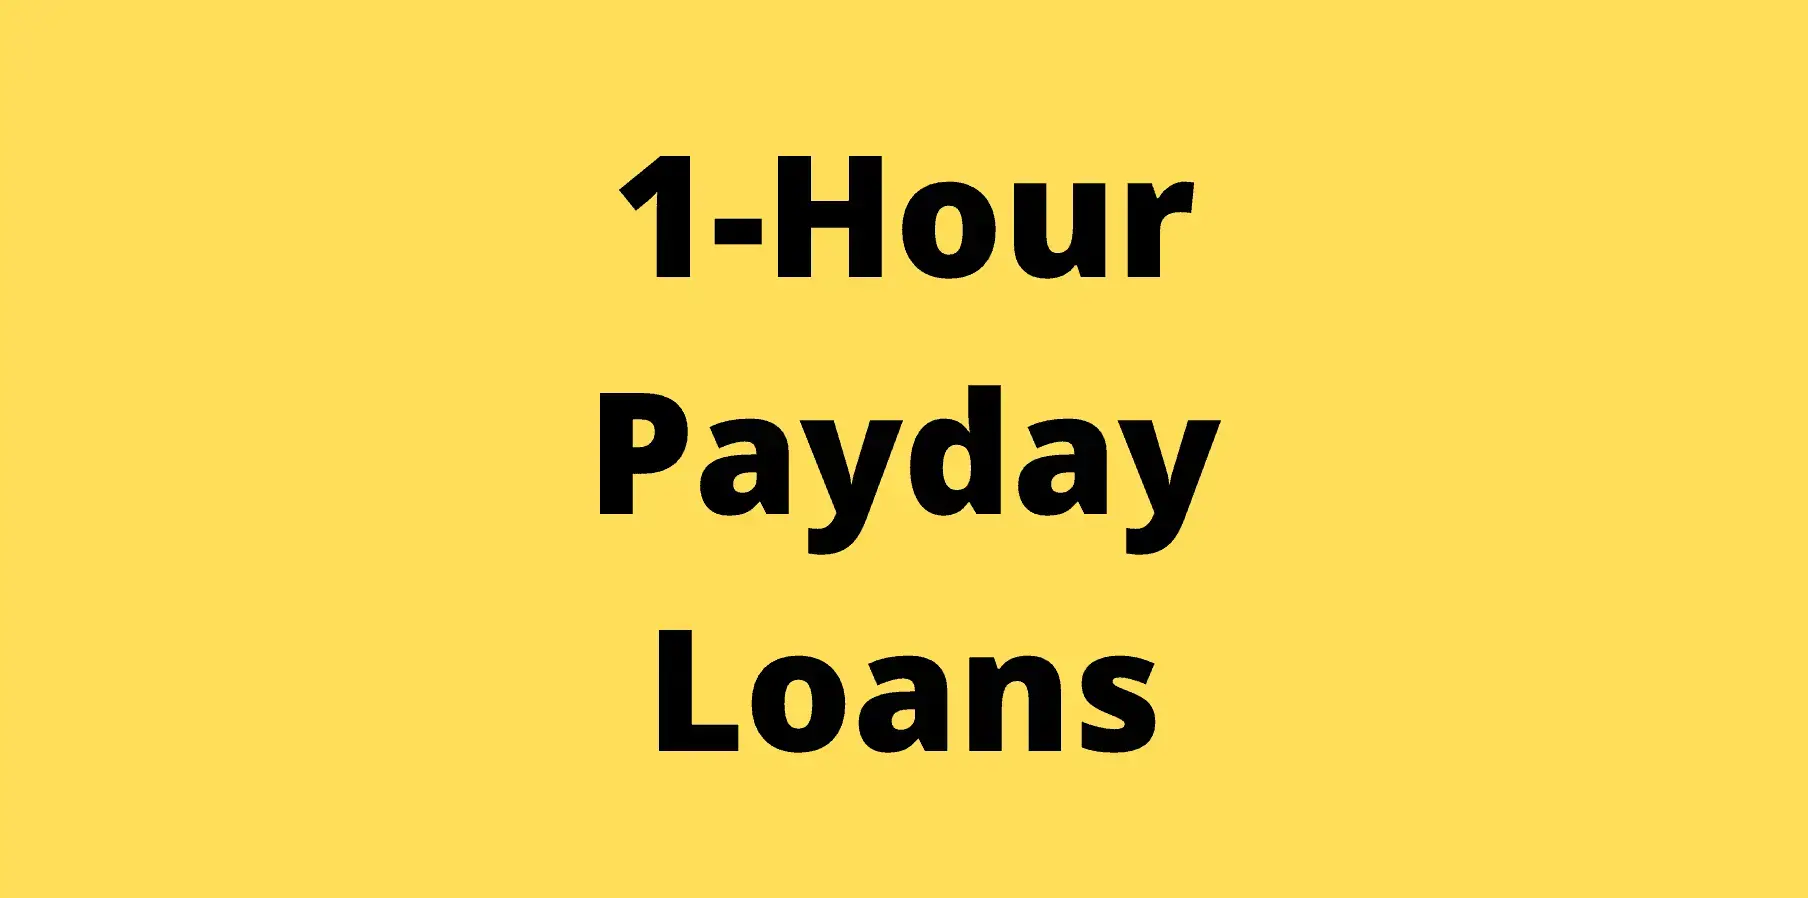 1-hour payday loans Australia